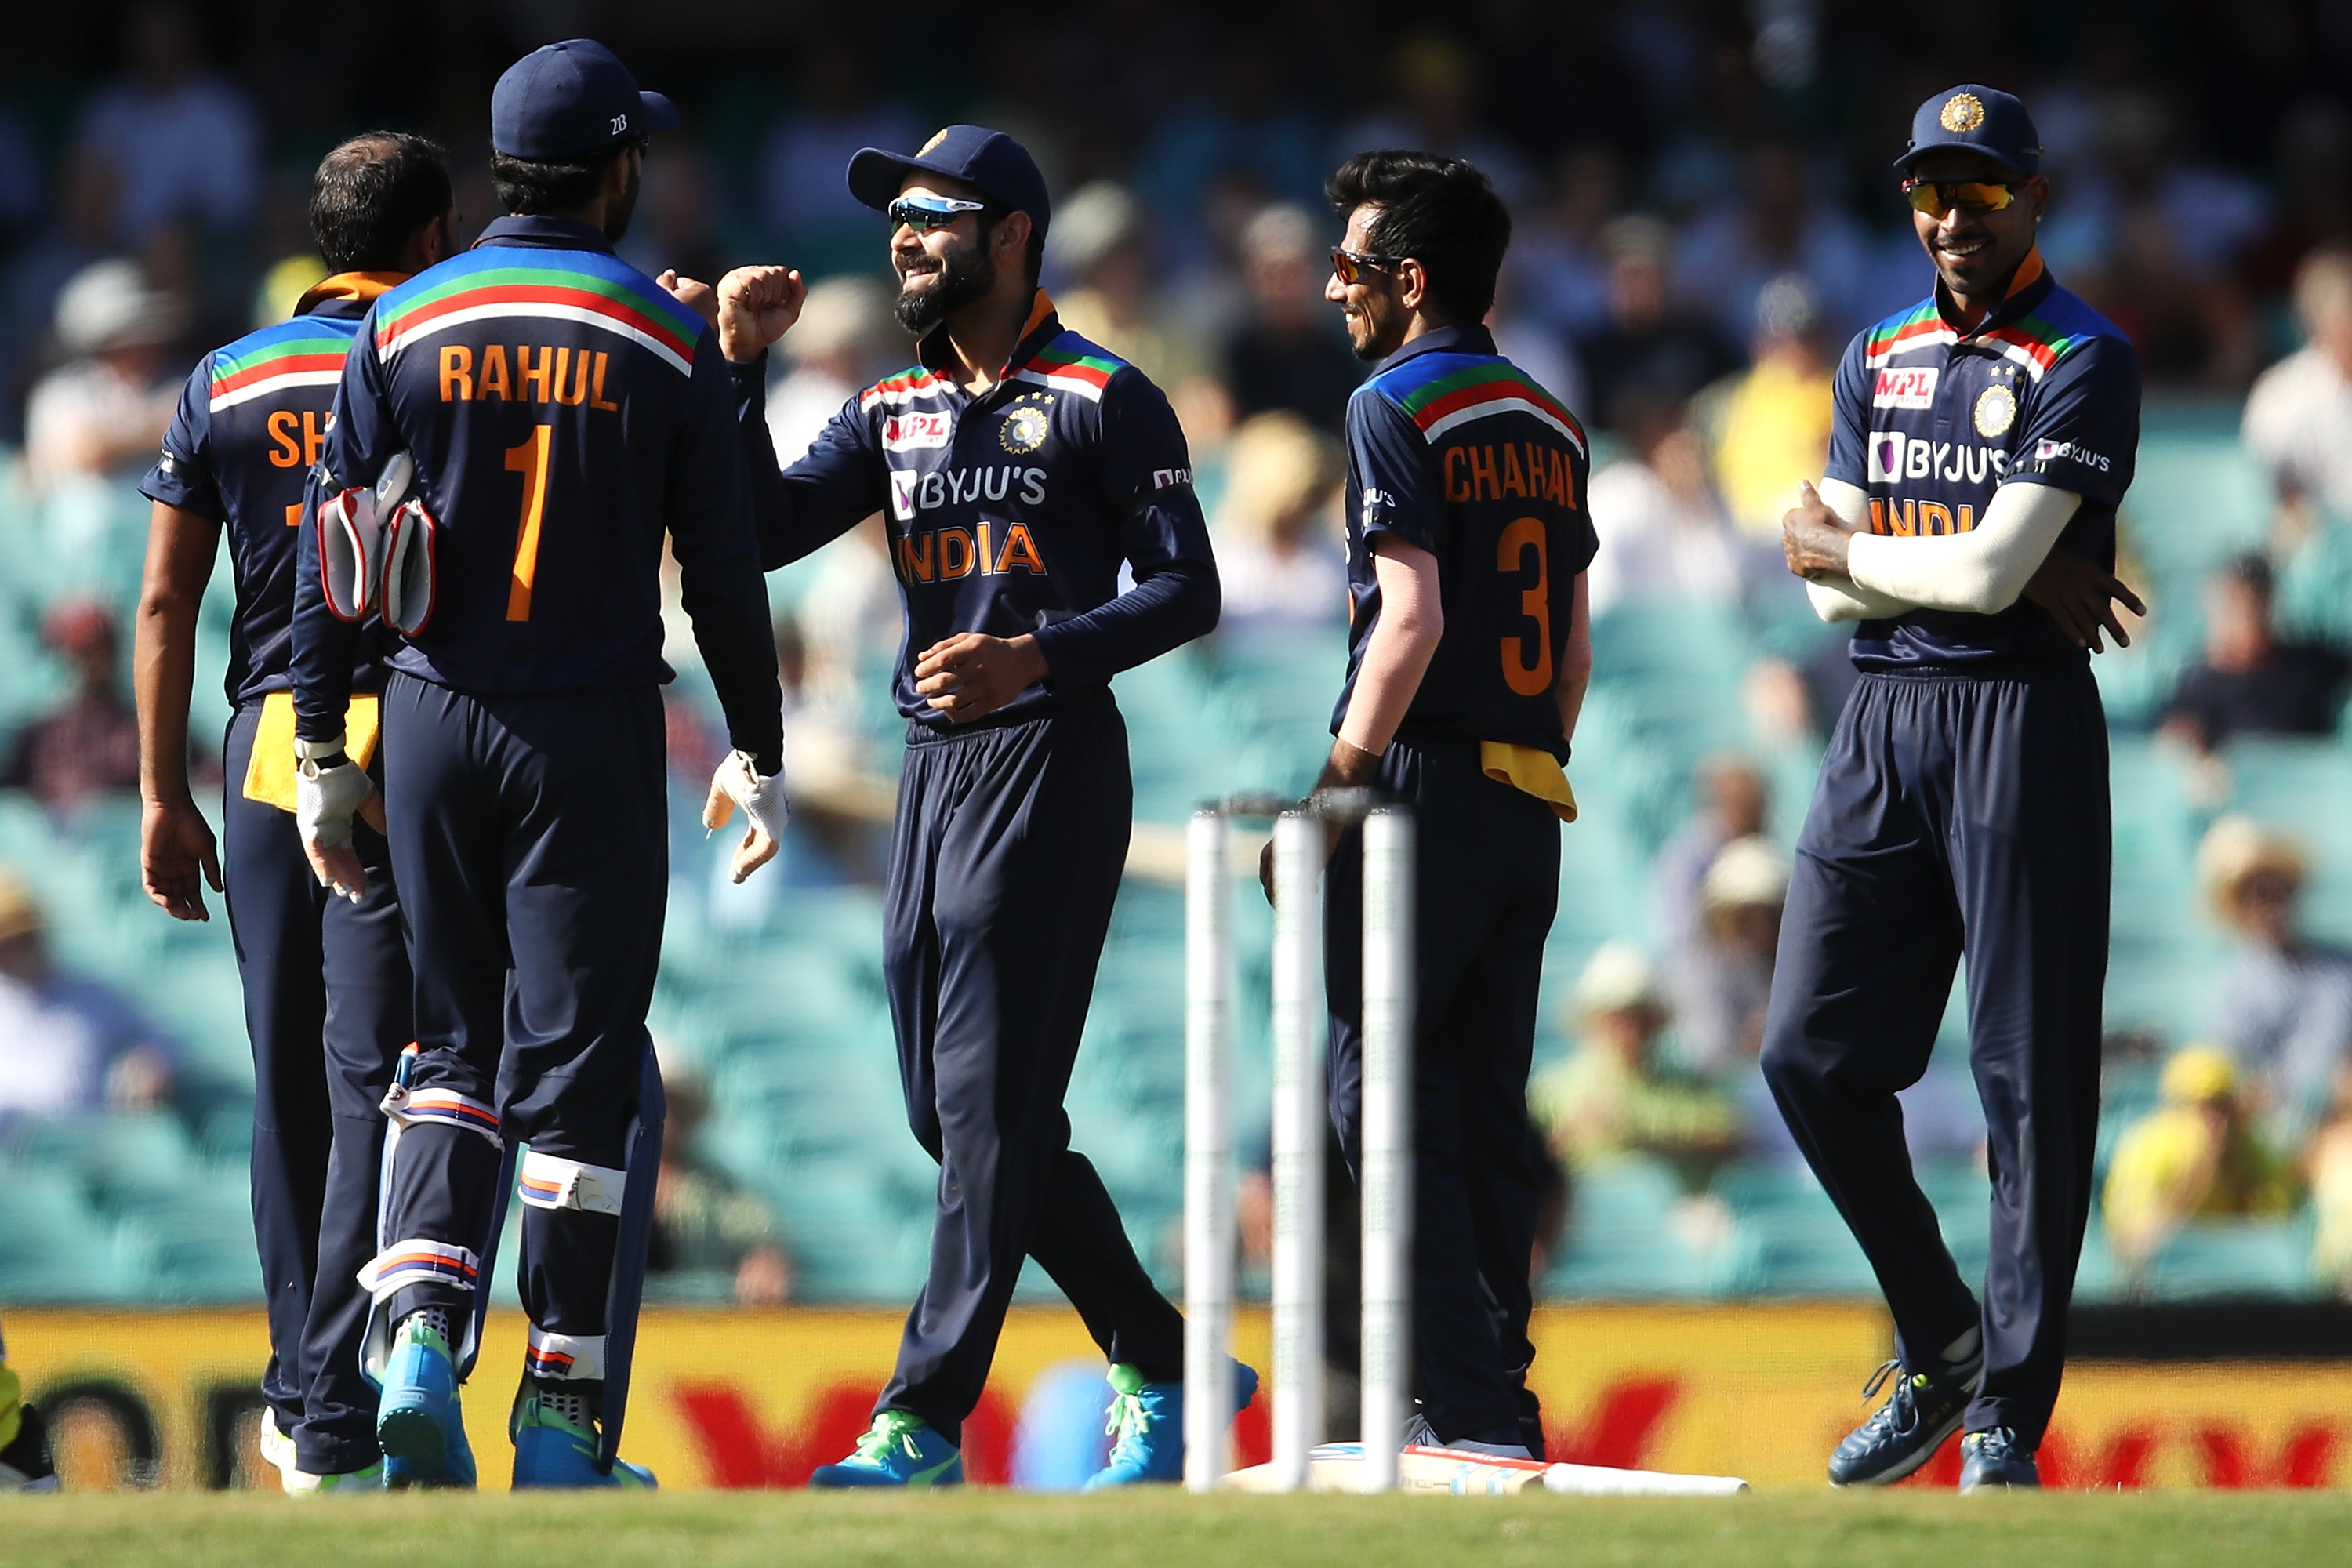 IND vs AUS | India is missing having top-order batsmen who can bowl a bit, reckons S Badrinath